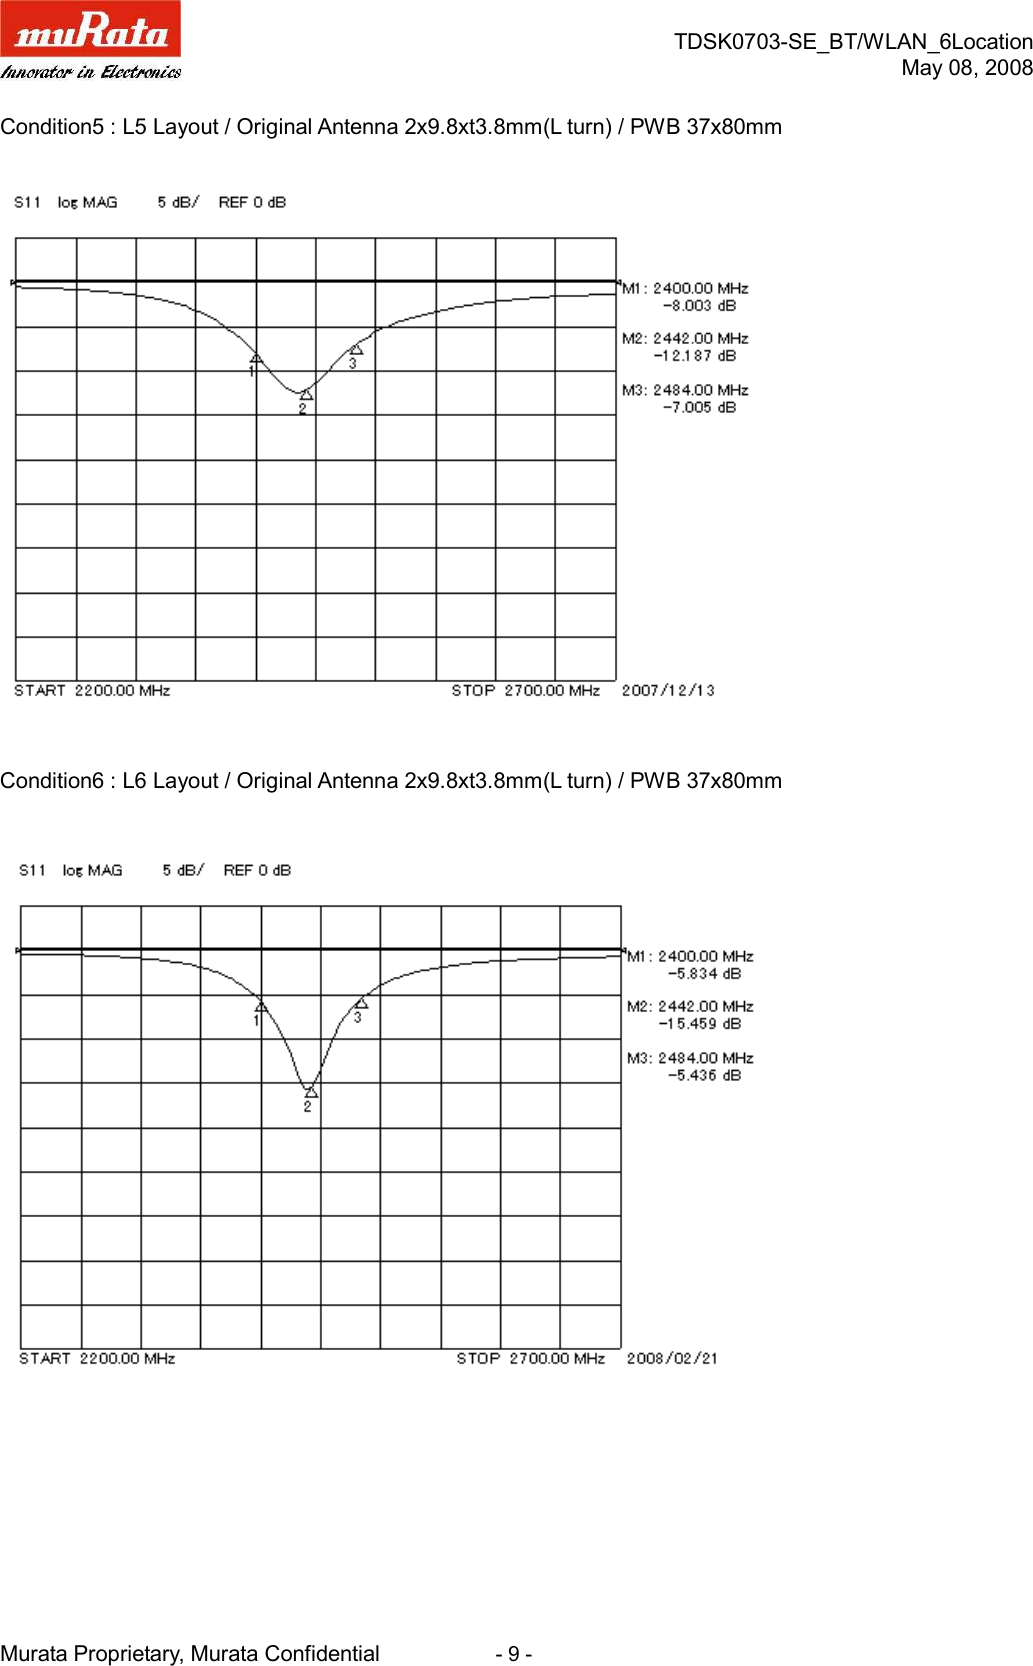 TDSK0703-SE_BT/WLAN_6LocationMay 08, 2008Murata Proprietary, Murata Confidential                      - 9 -Condition5 : L5 Layout / Original Antenna 2x9.8xt3.8mm(L turn) / PWB 37x80mmCondition6 : L6 Layout / Original Antenna 2x9.8xt3.8mm(L turn) / PWB 37x80mm